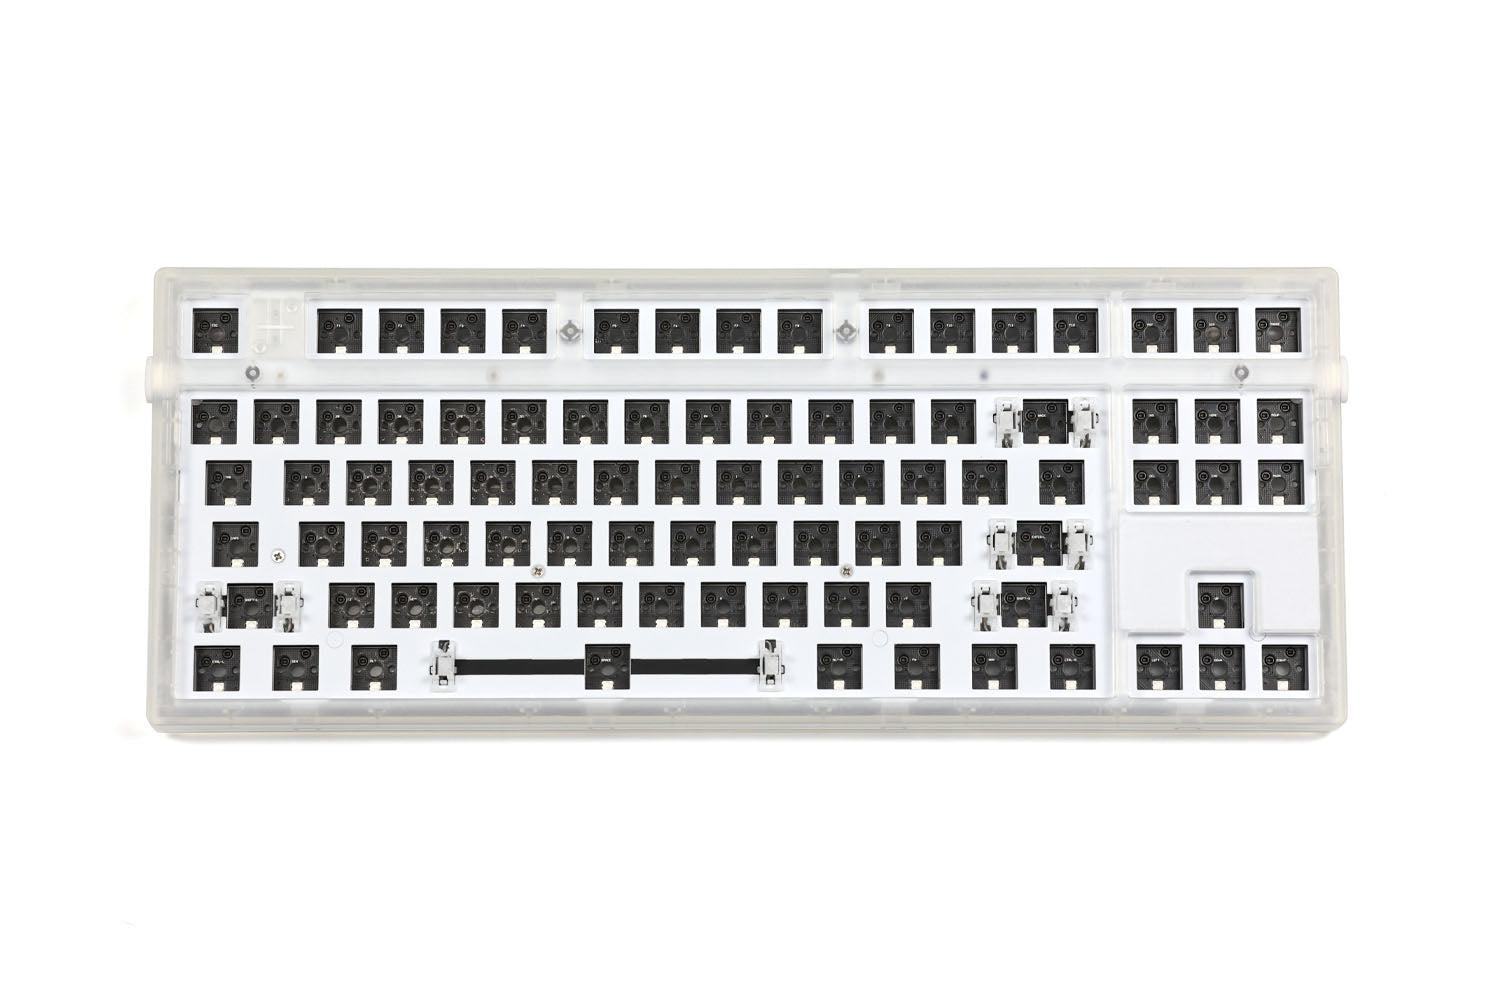 FL ESPORTS MK870 Mechanical Keyboard Kit (80%)-Chosfox